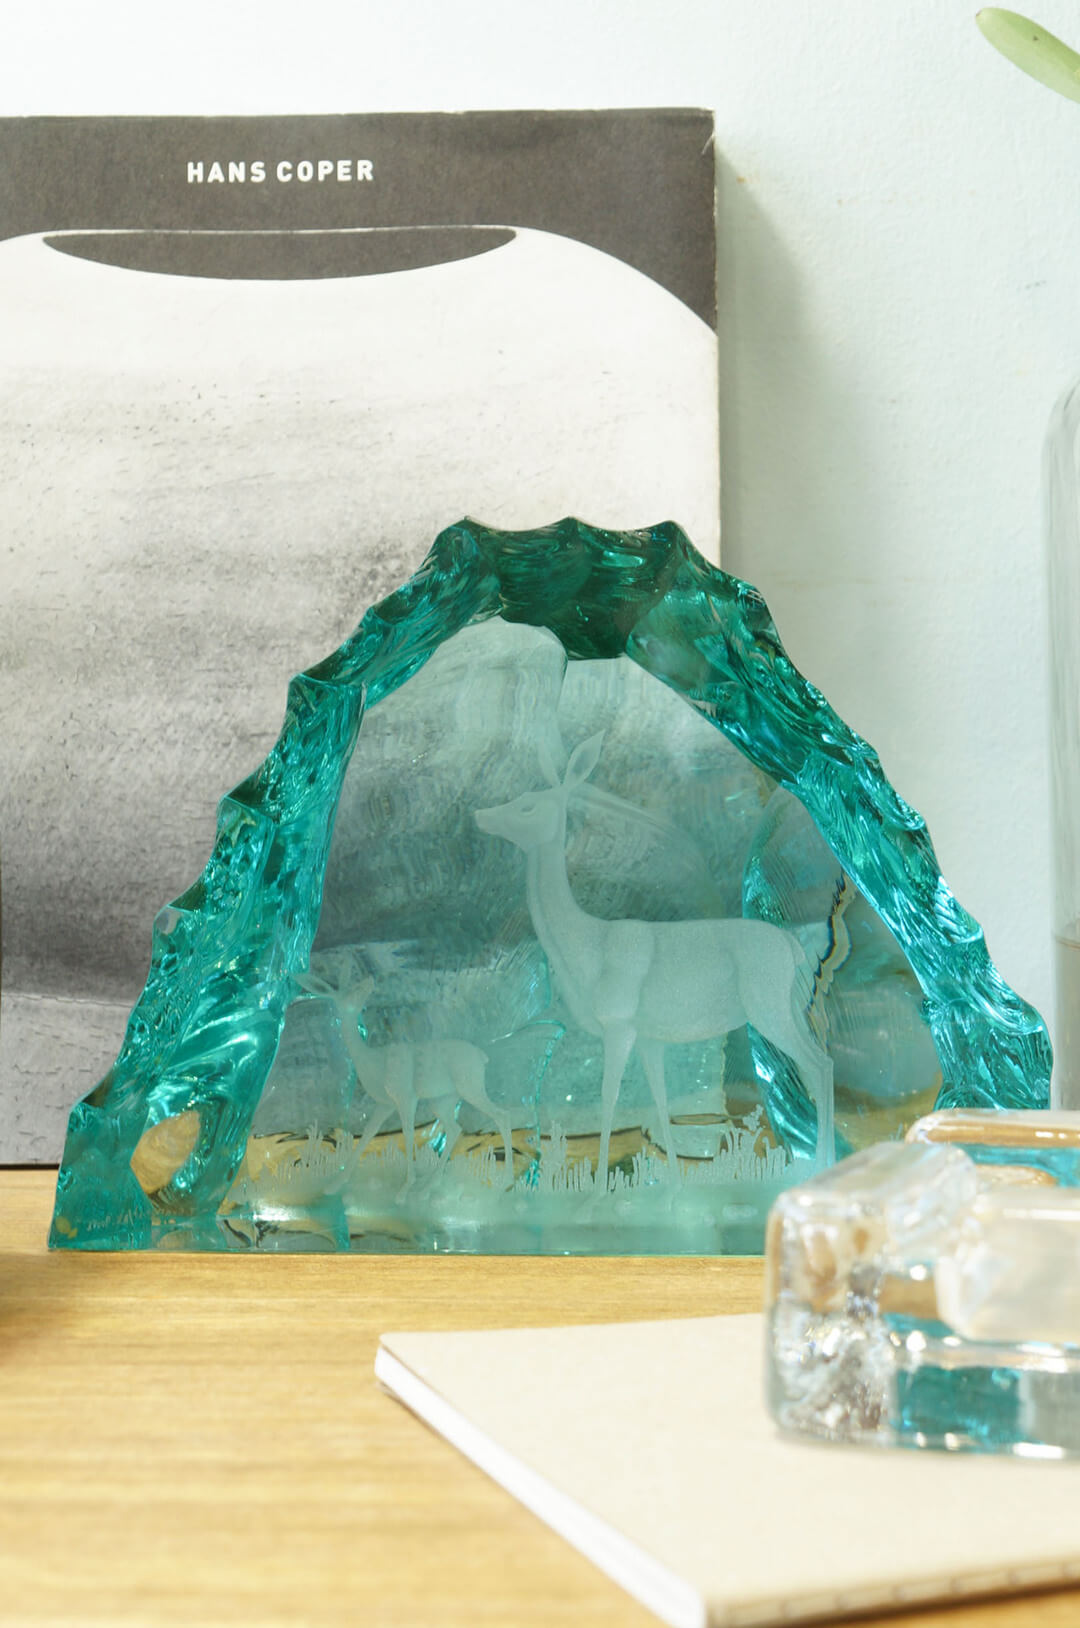 Kosta Glass Sculpture "Icebergs" Vicke Lindstrand/コスタ アイスバーク ガラス彫刻 ヴィッケ・リンドストランド スウェーデン 北欧雑貨 インテリア